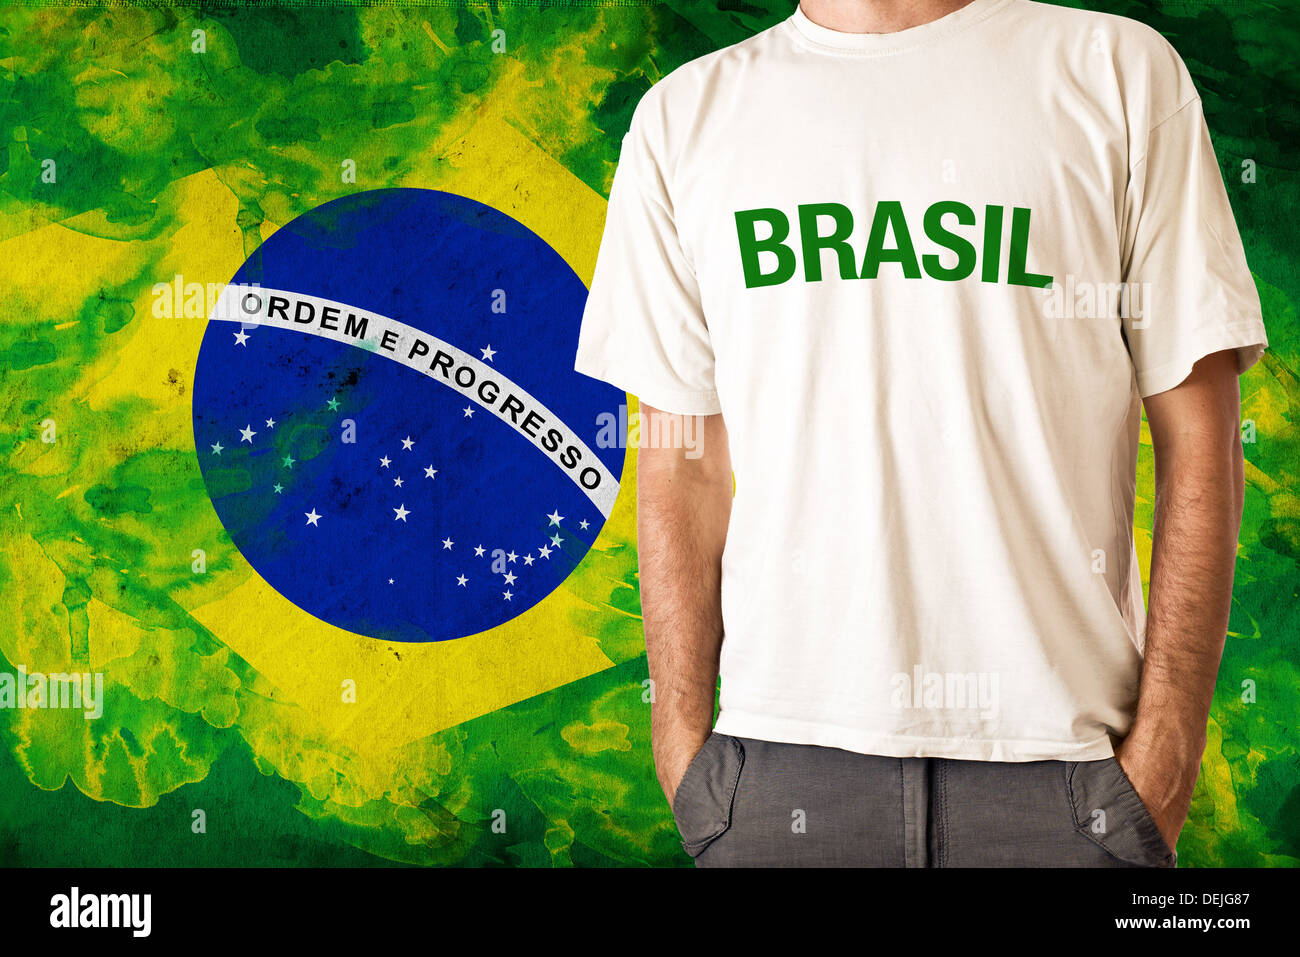 Man in white shirt with title BRASIL, Brasilian flag in background Stock Photo